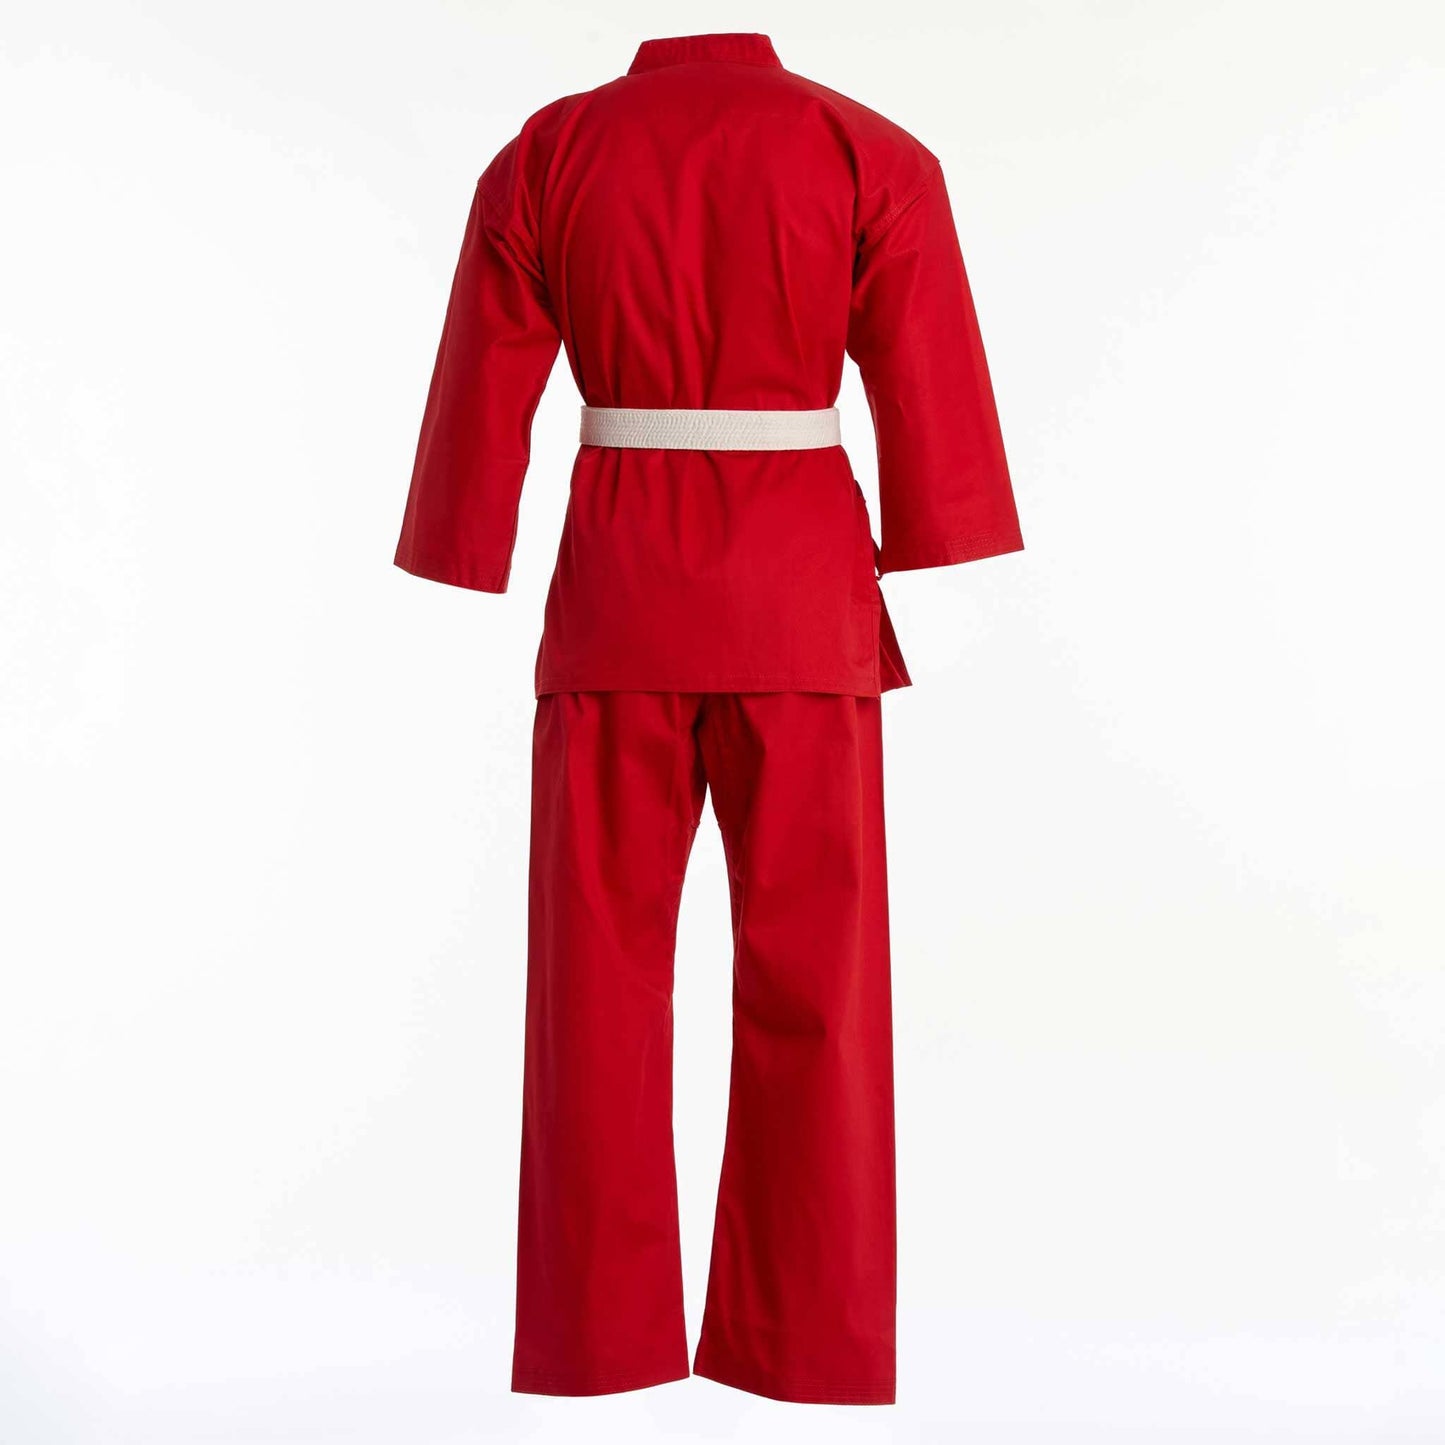 ProForce 7.5 oz. Karate Uniform (Elastic Drawstring) - 55/45 Blend - Violent Art Shop